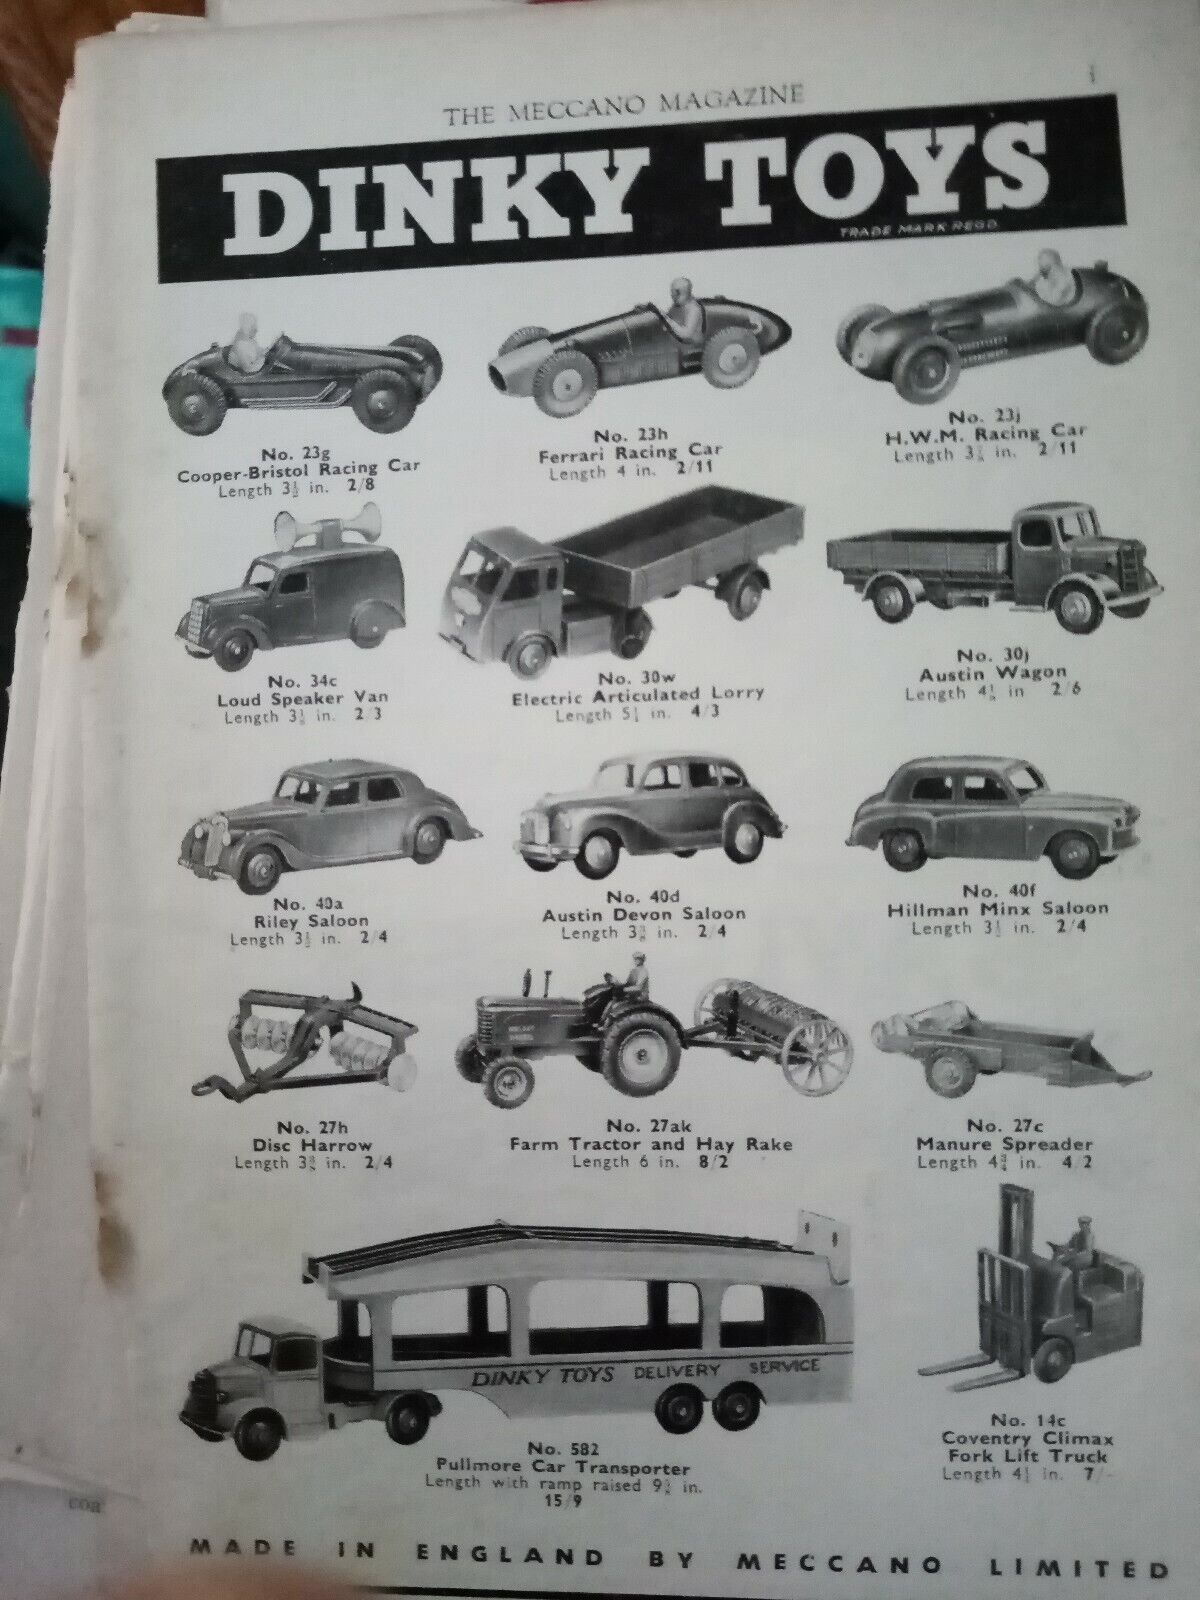 Kvc7 Ephemera 1953 advert dinky toys Cooper Bristol racing car